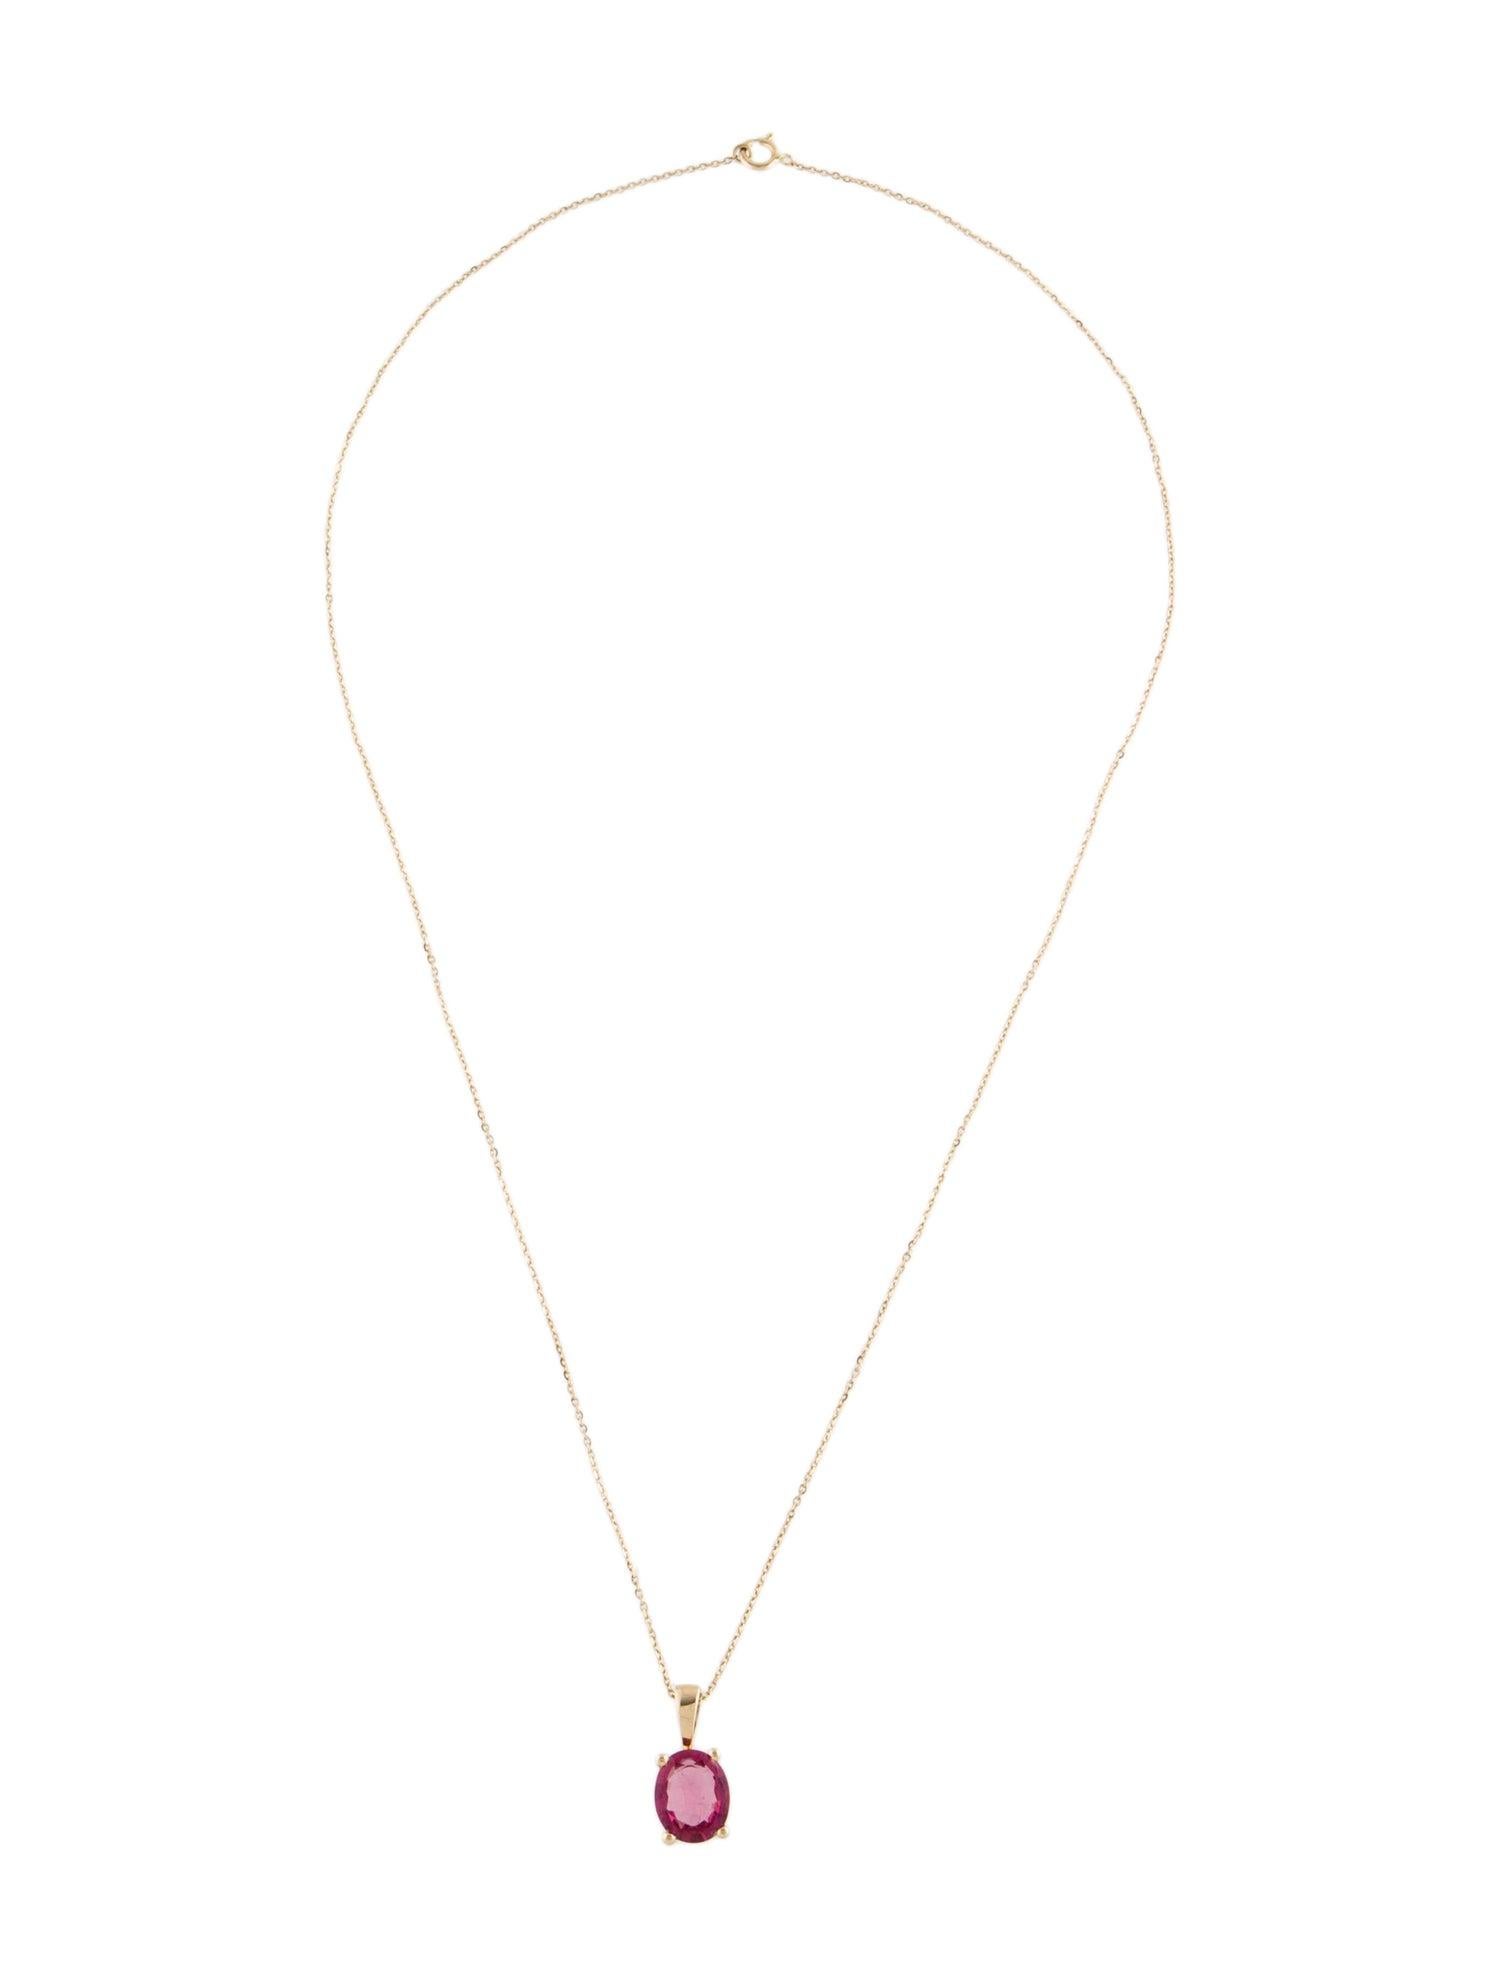 Women's or Men's Luxury 14K Tourmaline Pendant Necklace - Stunning Gemstone Statement Jewelry For Sale